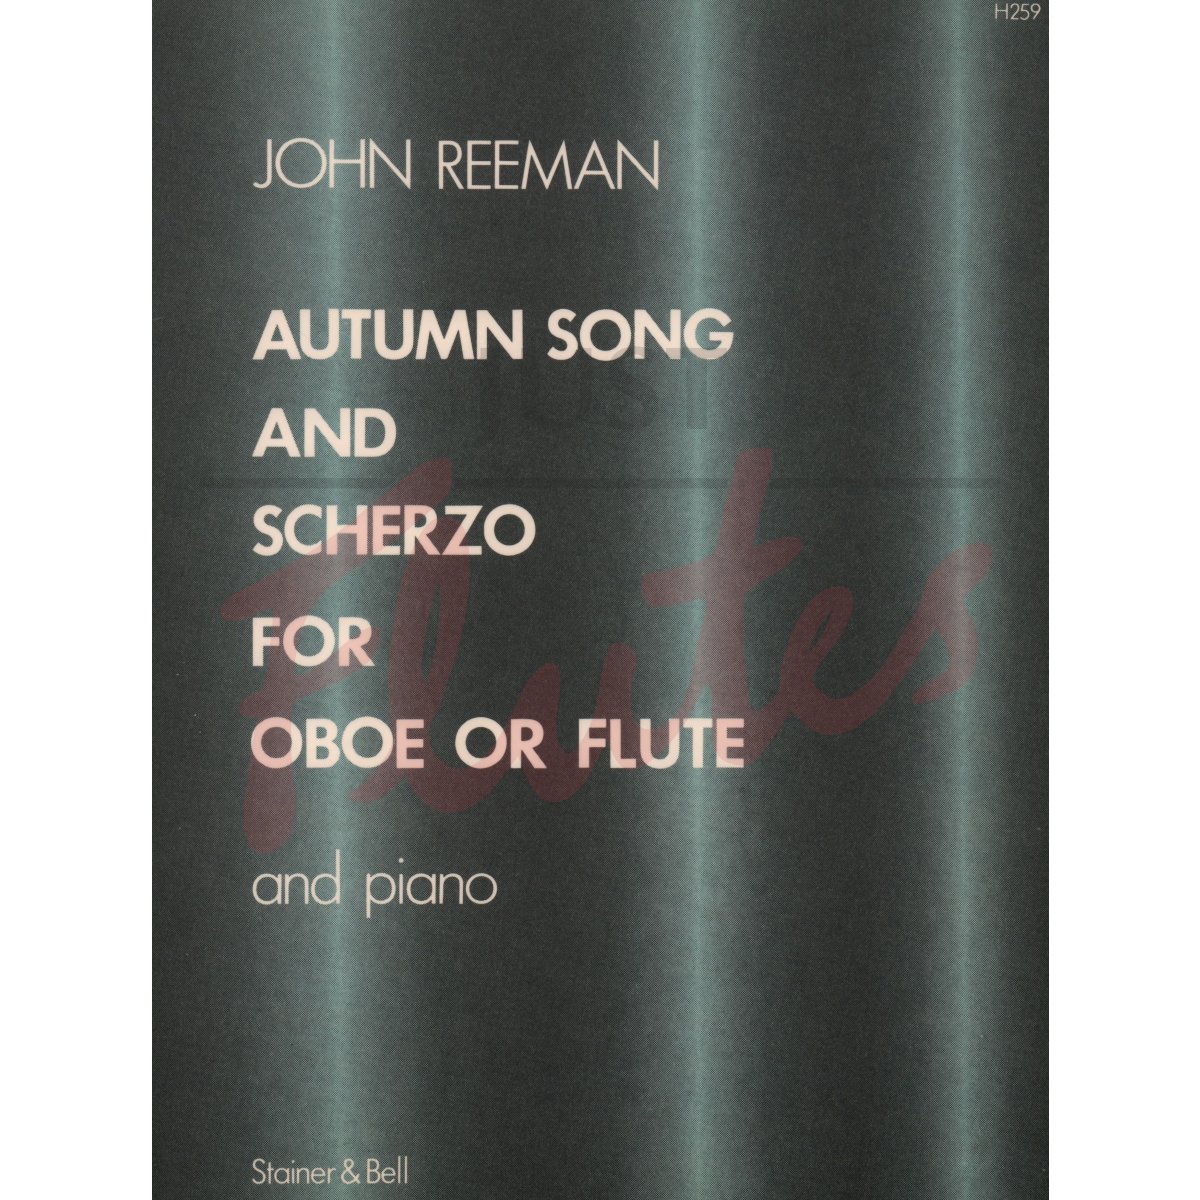 Autumn Song and Scherzo